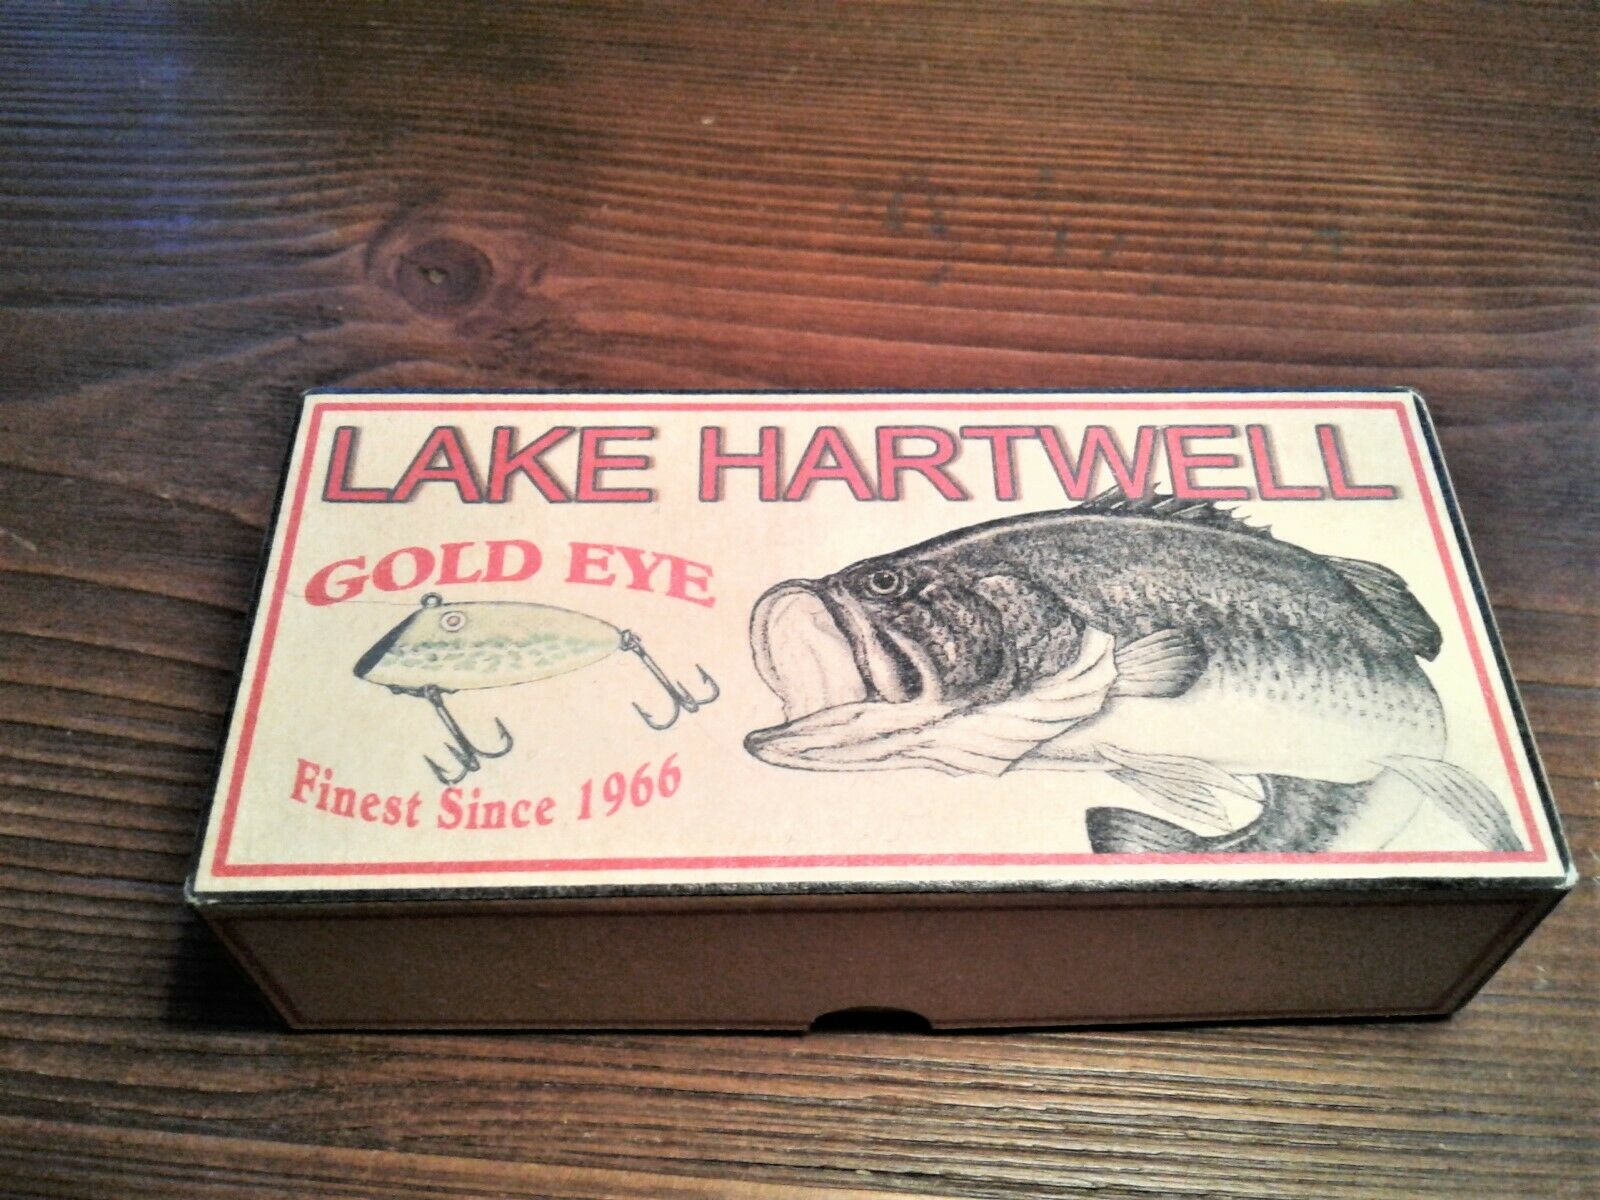 Lake Hartwell Fishing Lure Boxes Make Great Lake House Decorations